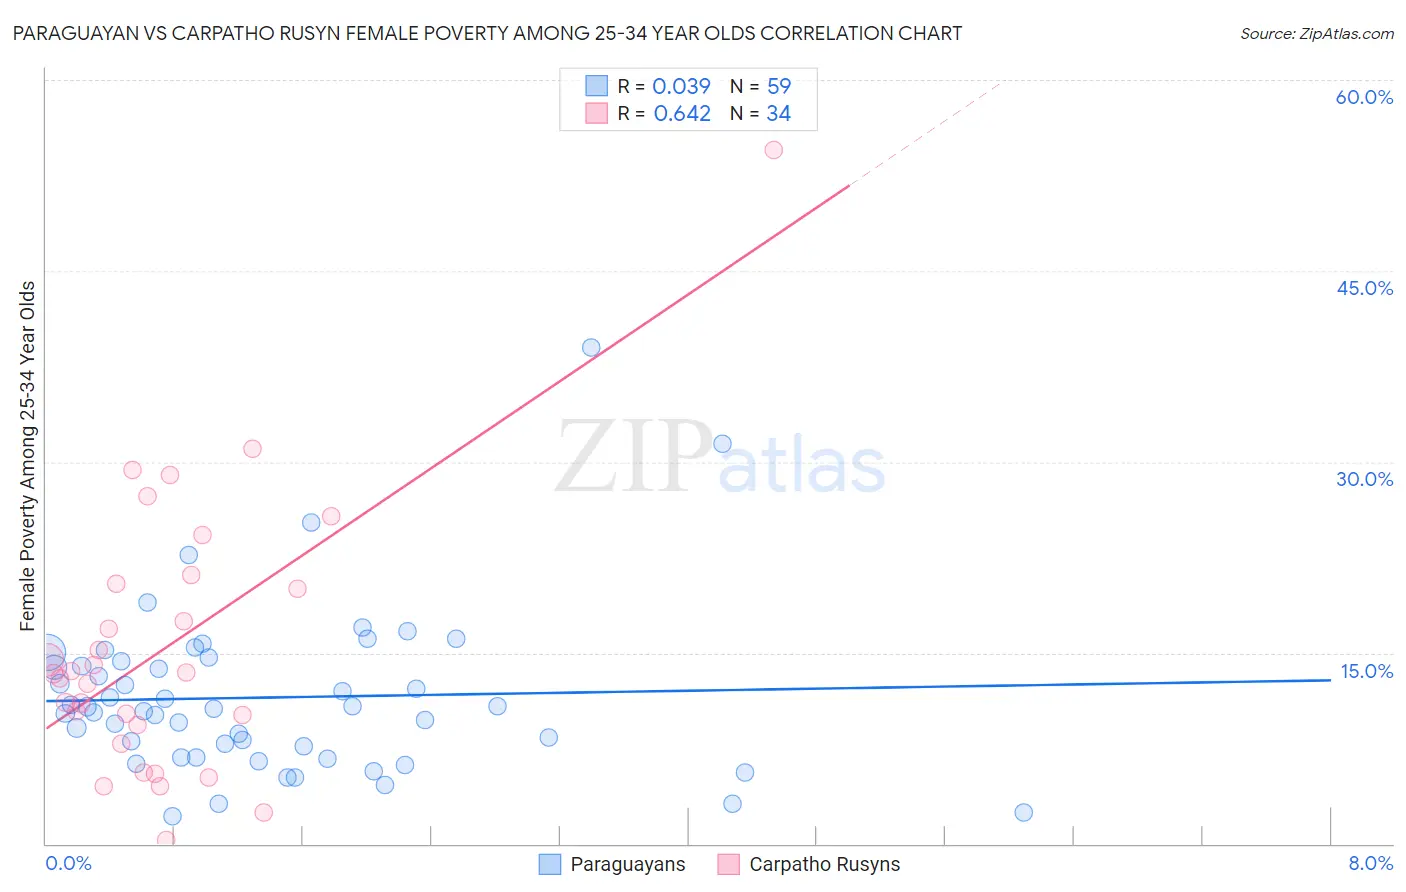 Paraguayan vs Carpatho Rusyn Female Poverty Among 25-34 Year Olds